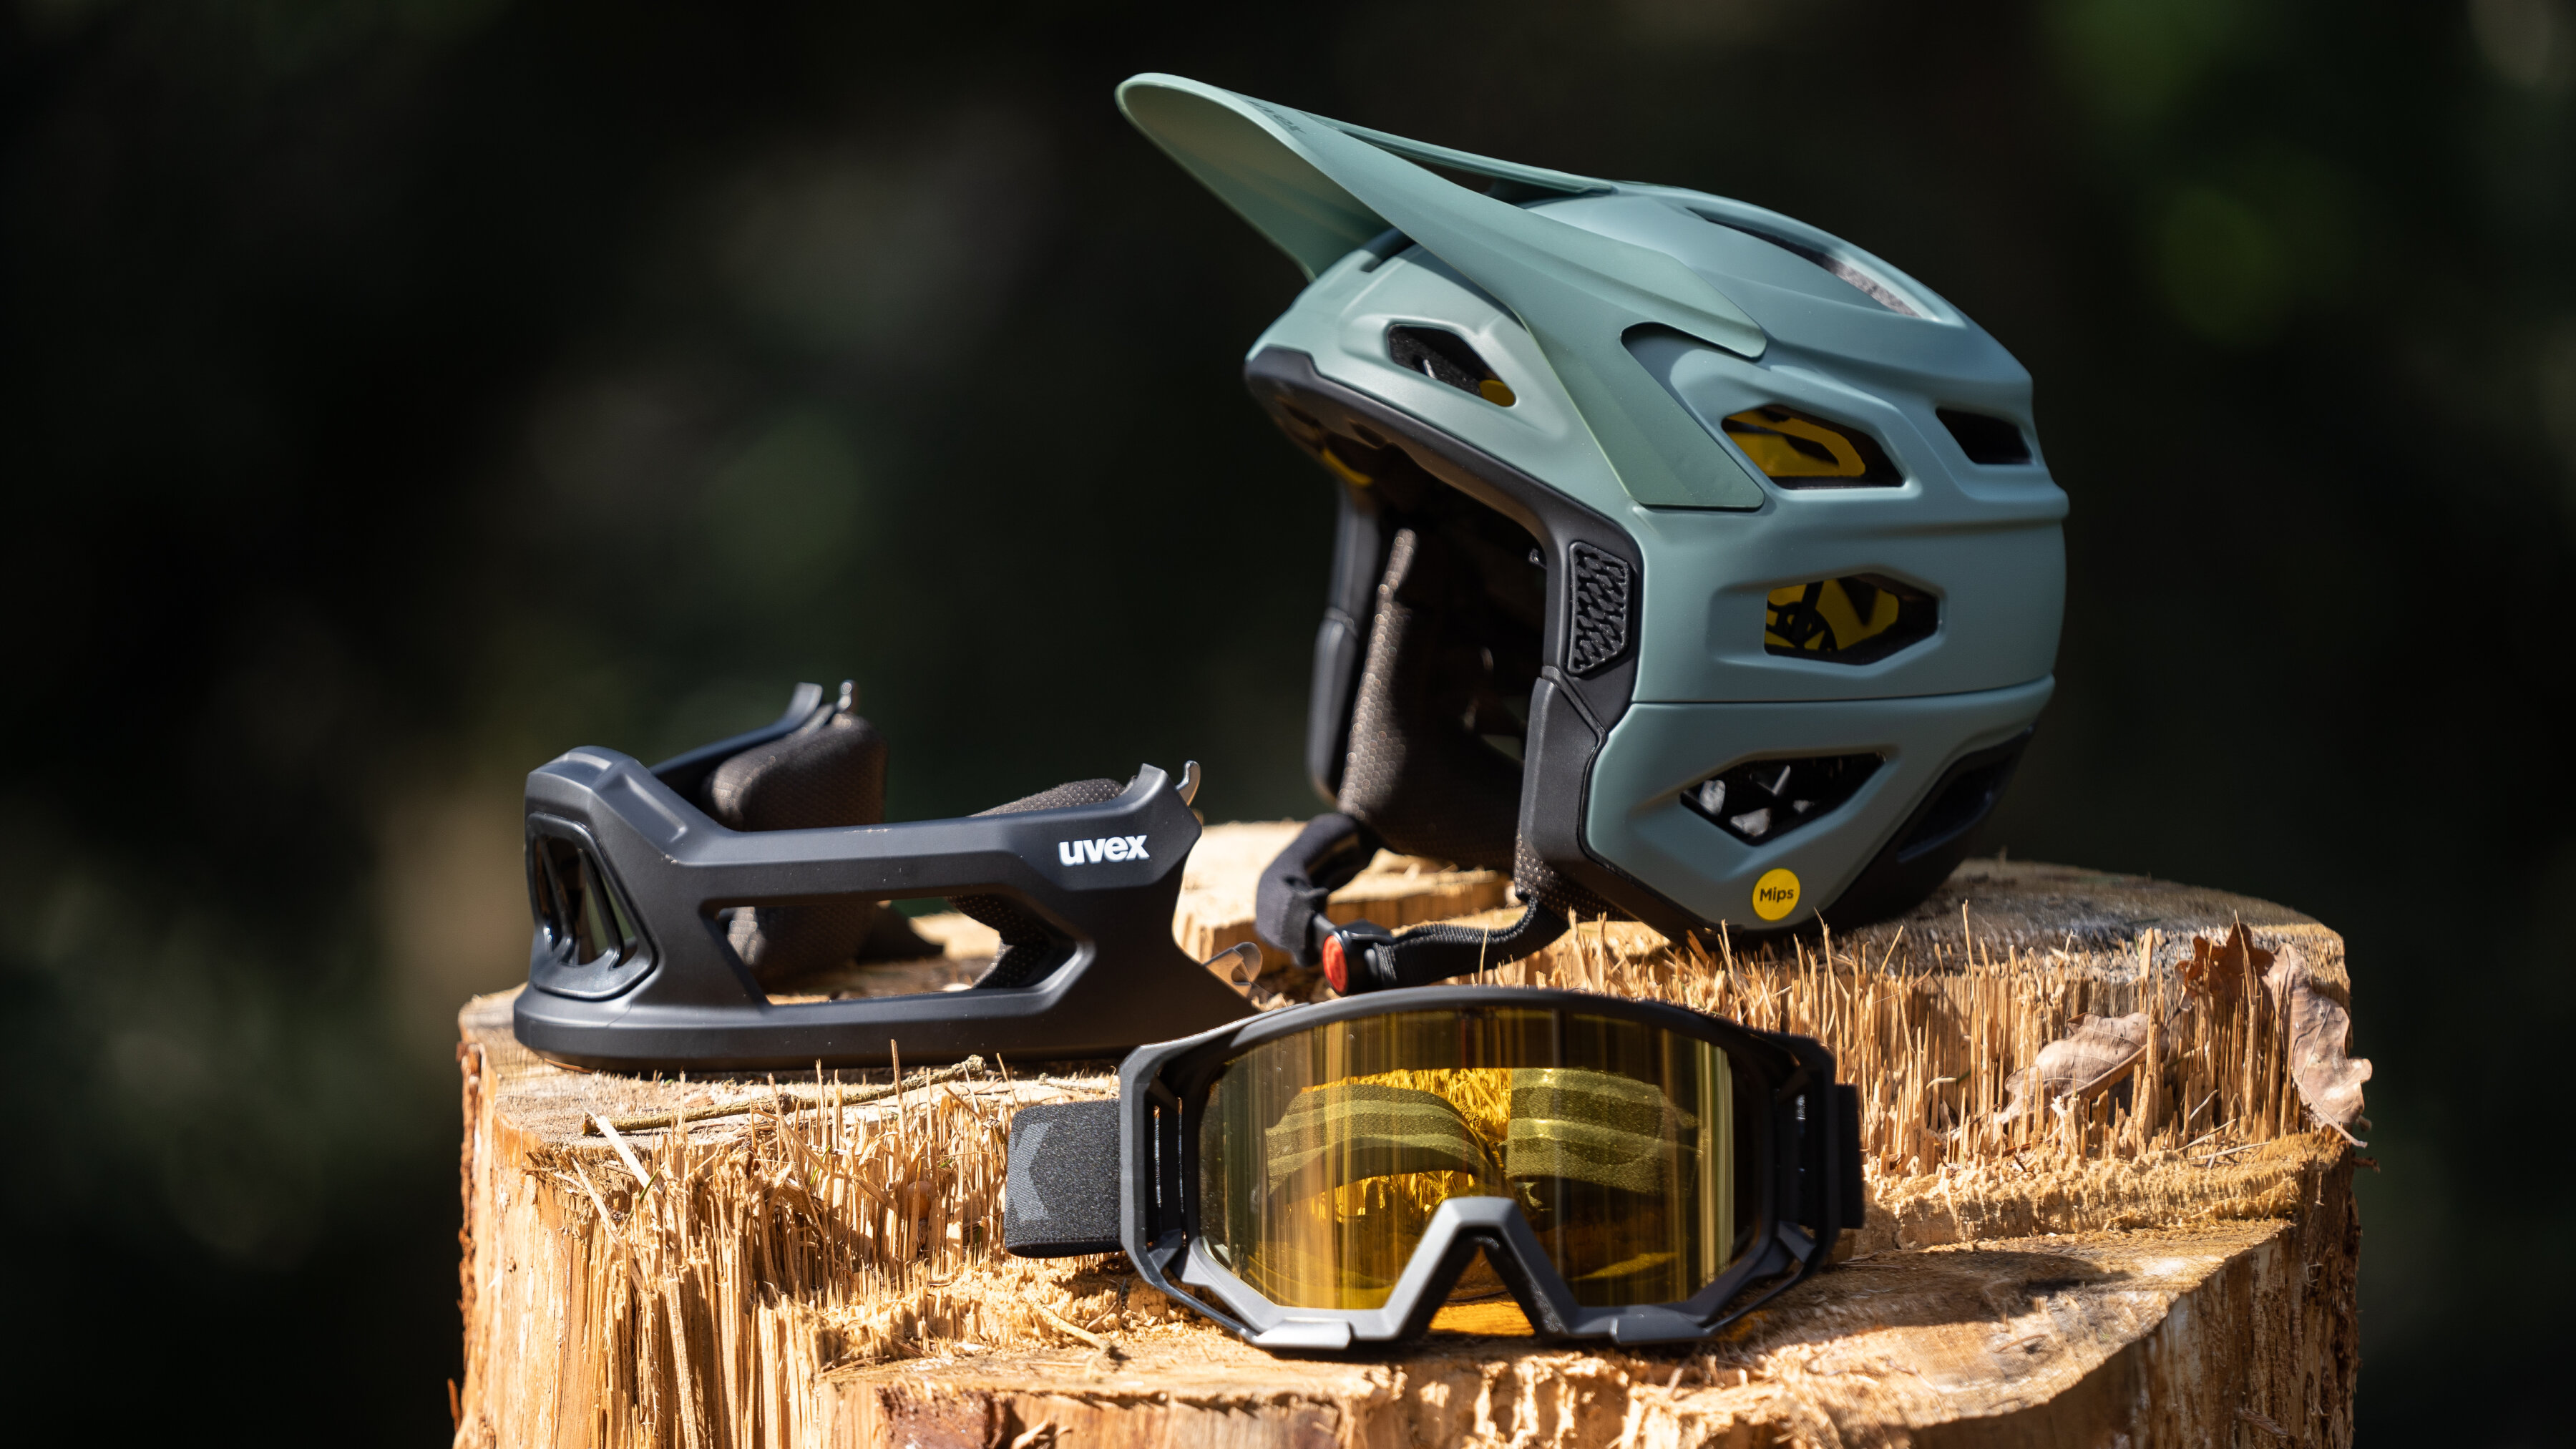 MTB Helm Test: Mountainbike-Helme und Full-Face-Helme im Test